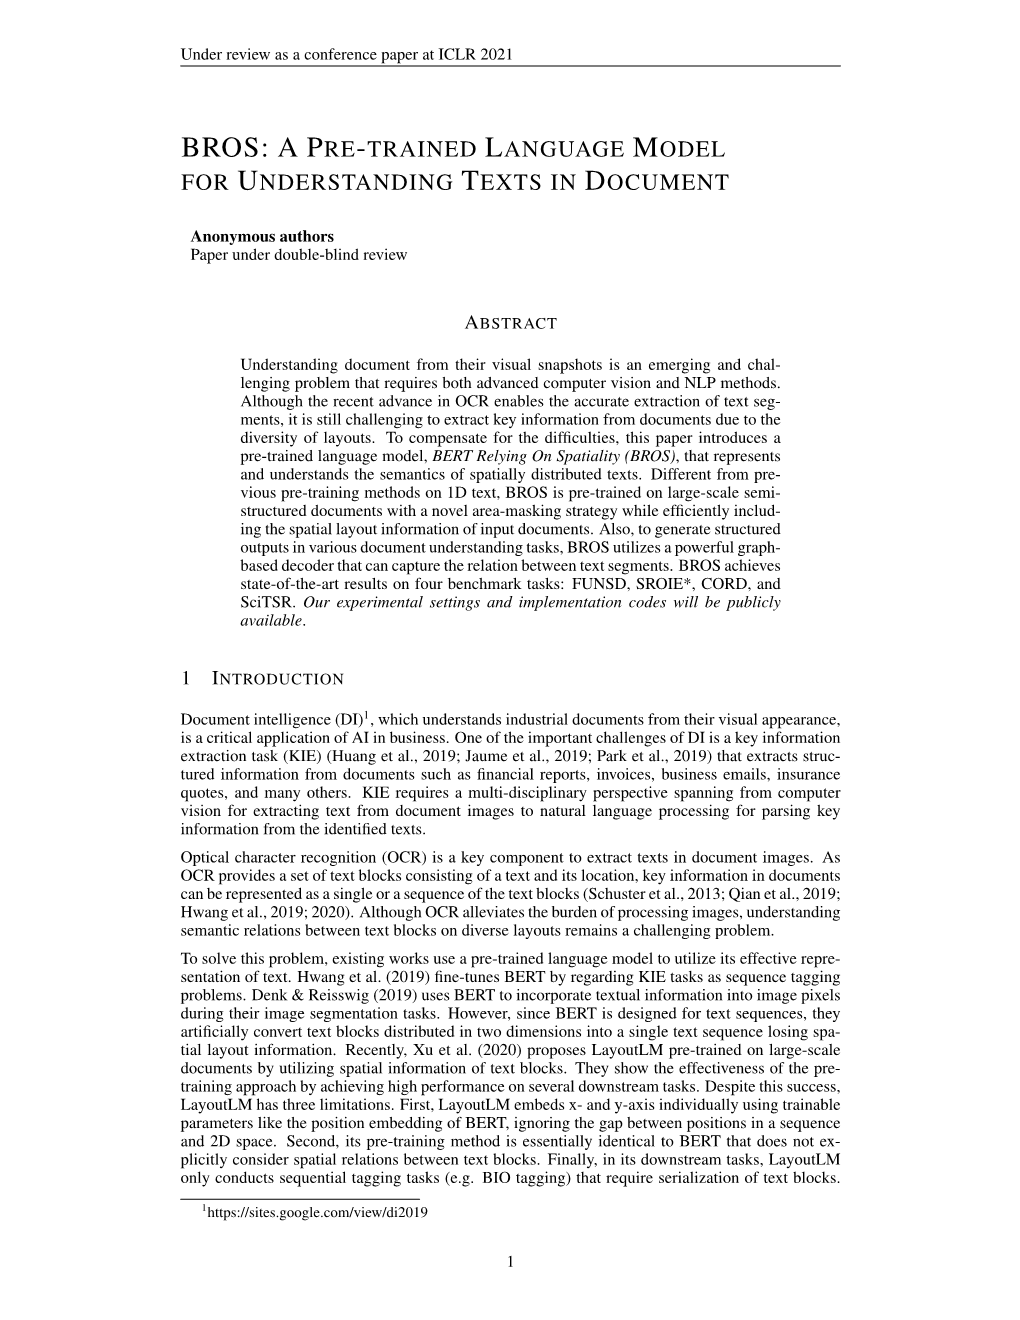 Bros:Apre-Trained Language Model for Understanding Textsin Document